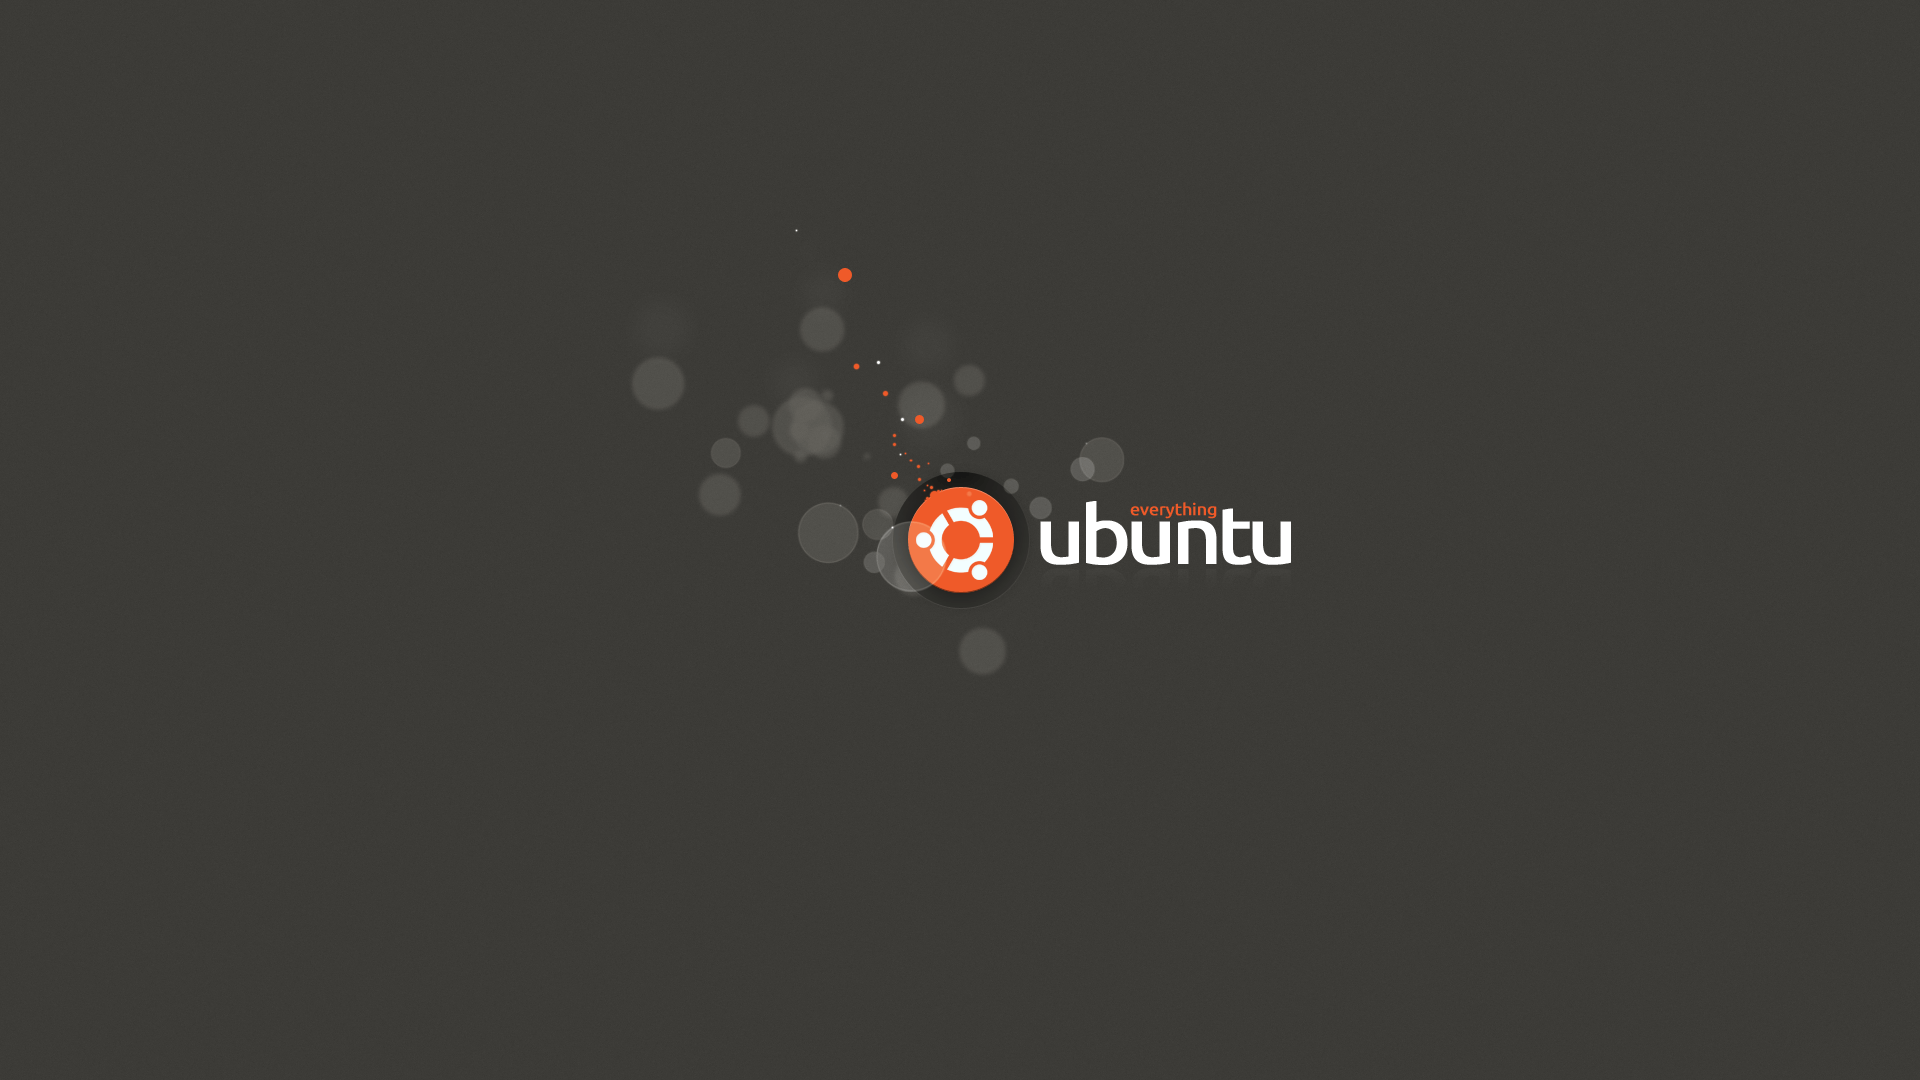 Linux Ubuntu Logo - Linux Ubuntu Logo And Font HD Wallpaper And Background Gallery Free ...